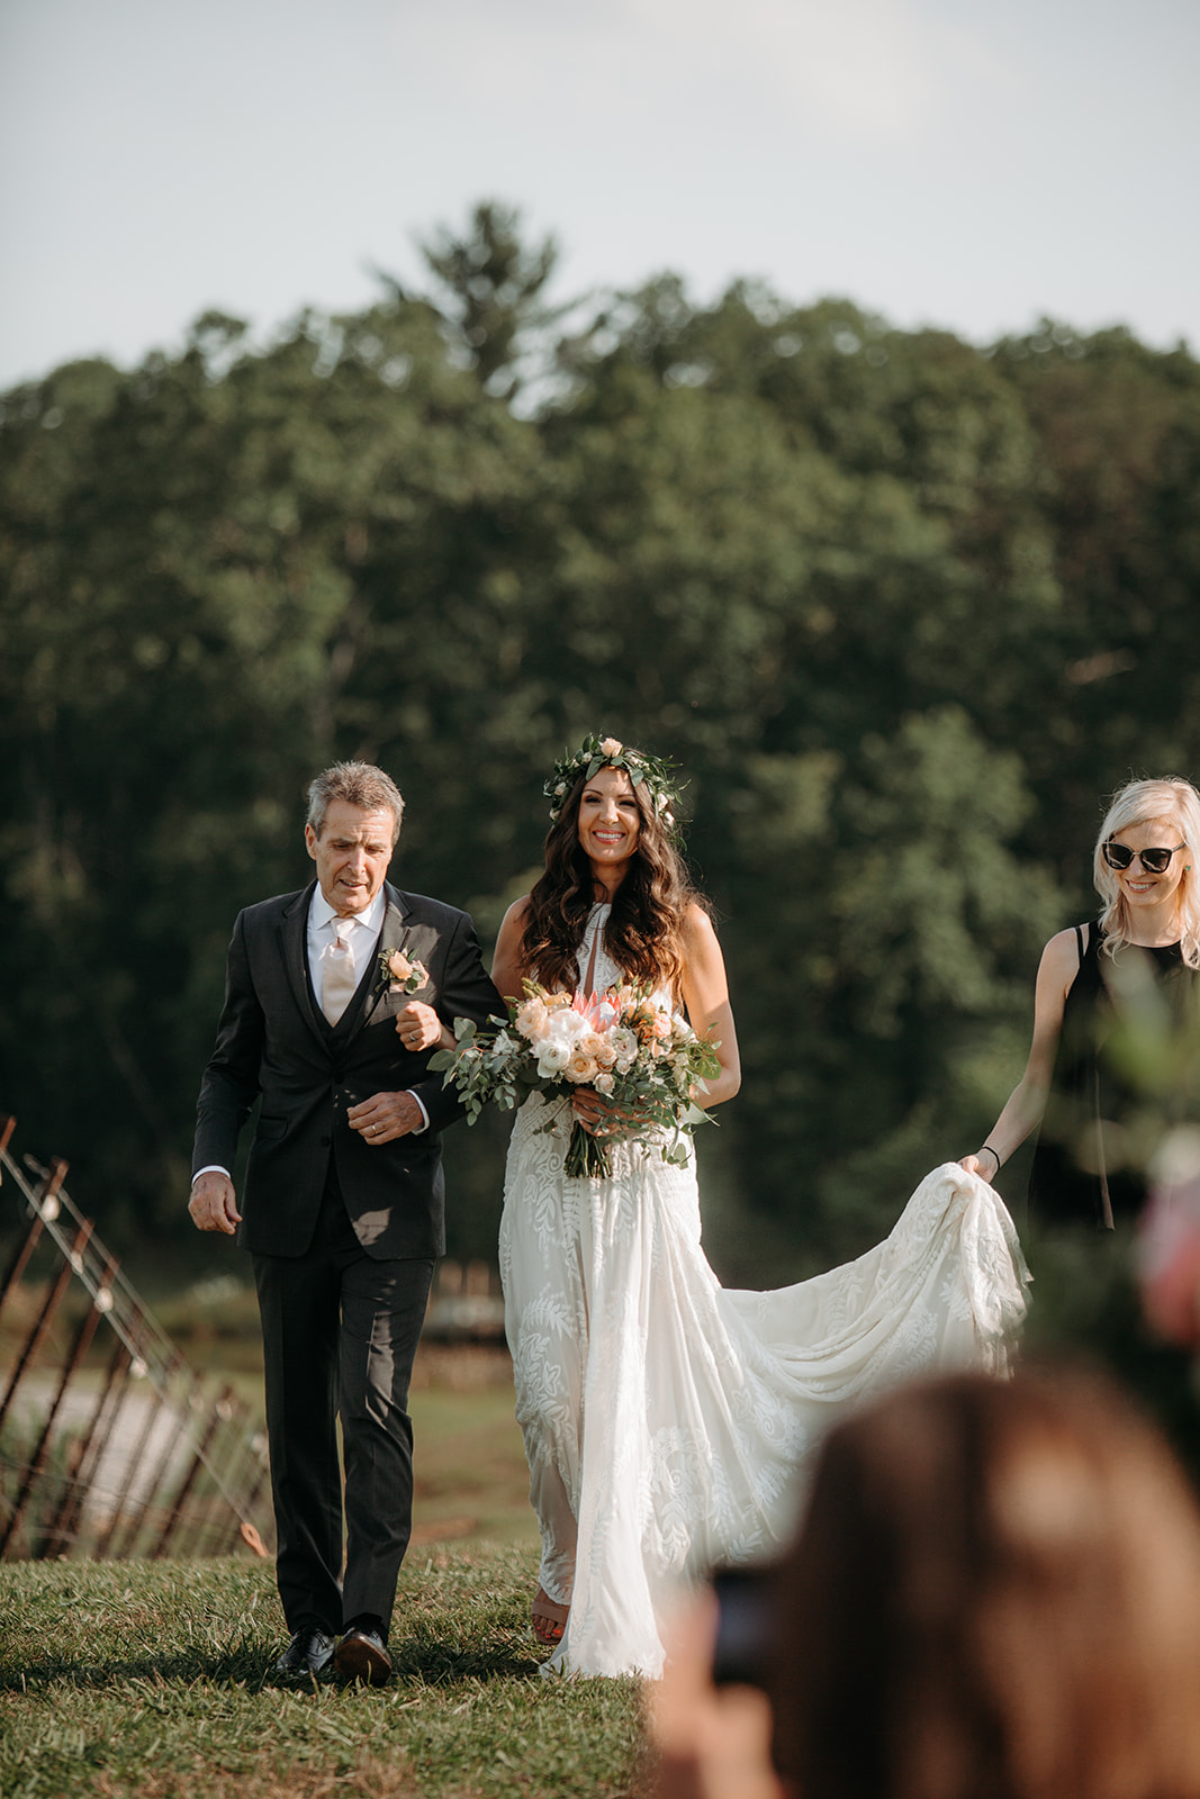 Wedding planner walks behind bride